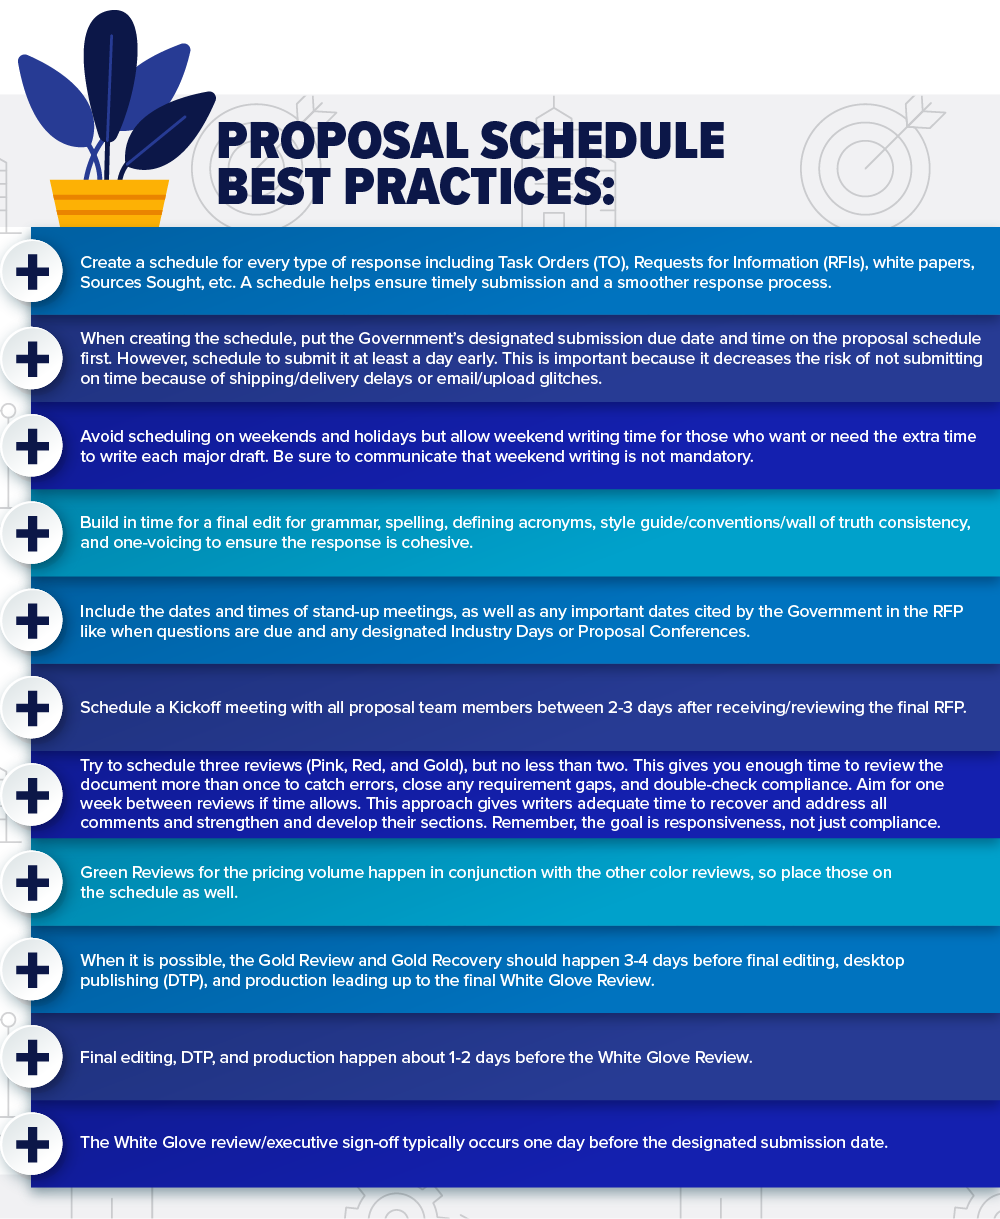 Proposal Schedule Best Practices Cheat Sheet-1